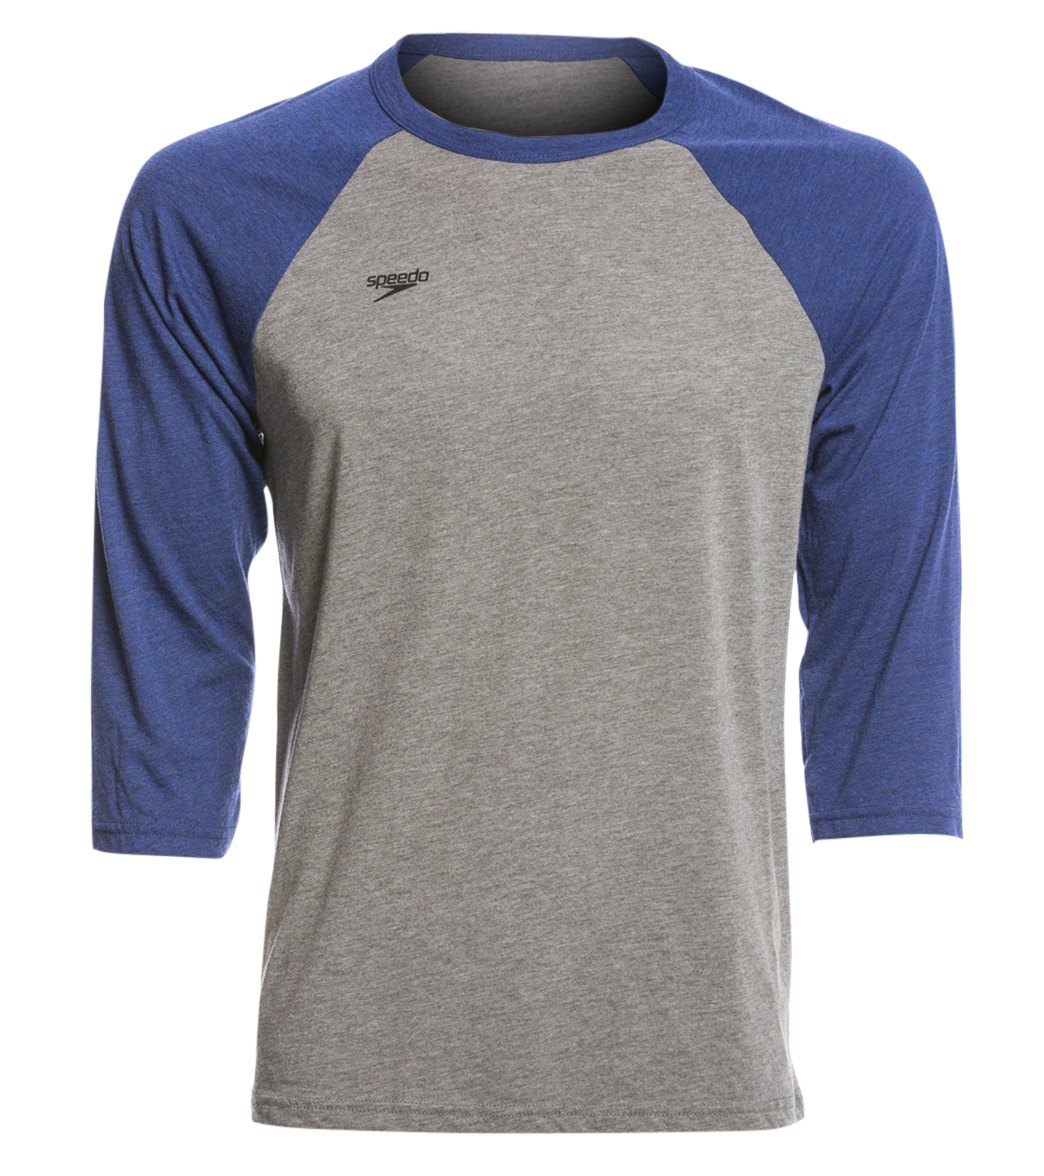 Speedo Men's Baseball Tee Shirt - Navy Large Cotton/Polyester - Swimoutlet.com